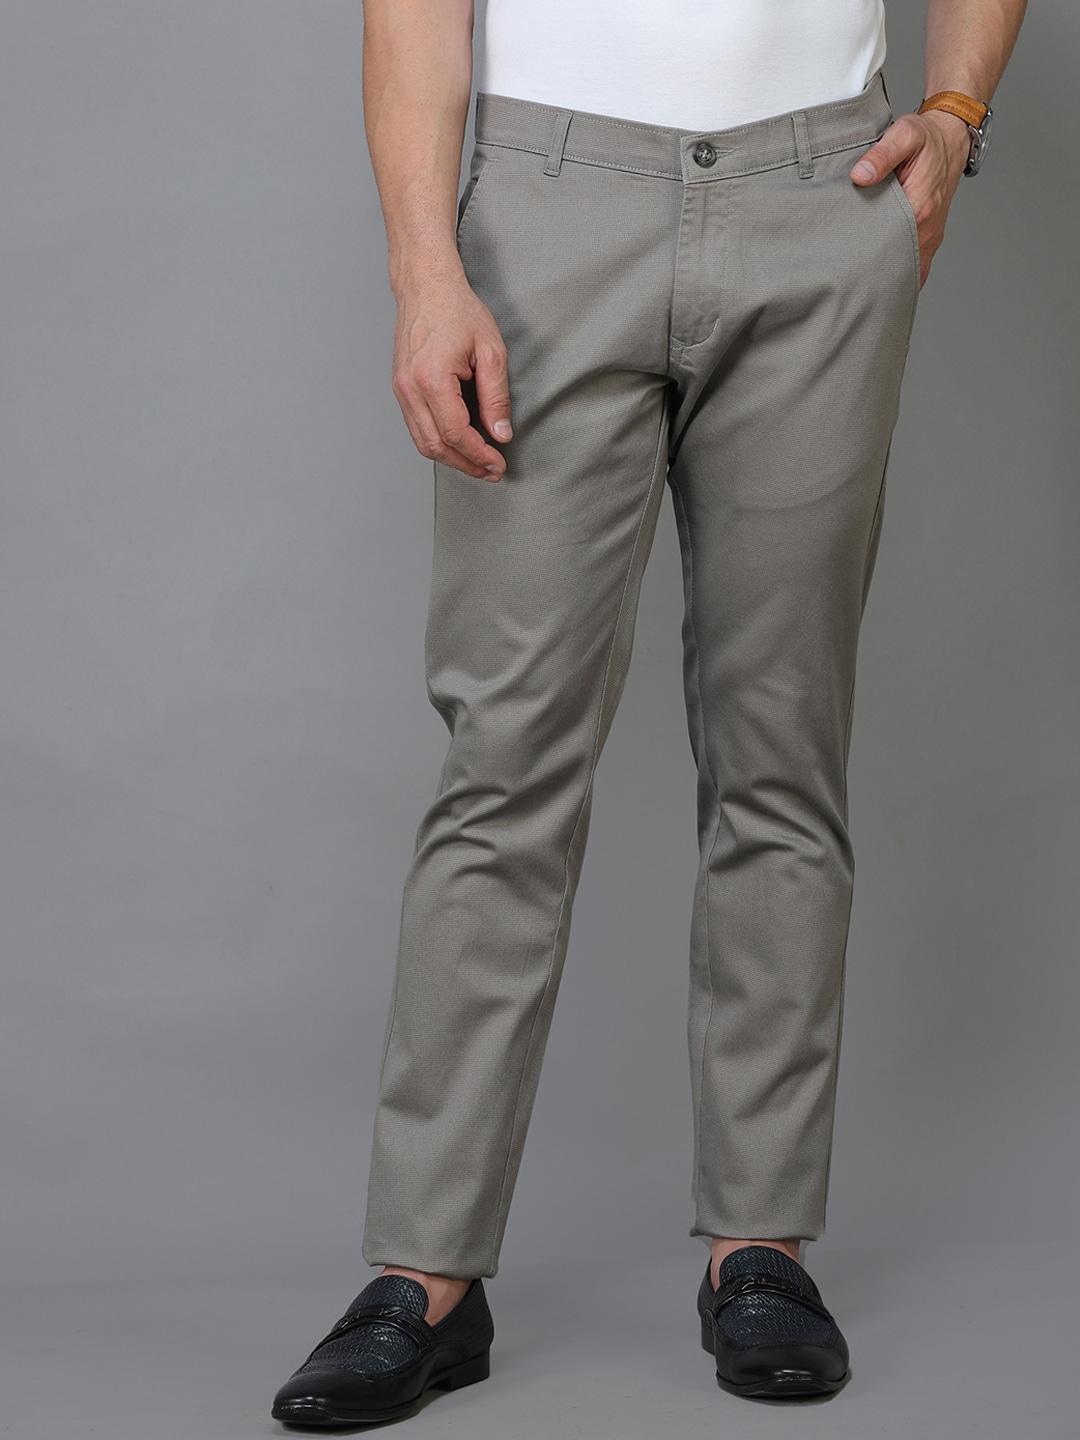 tqs-men-grey-smart-slim-fit-chinos-trousers